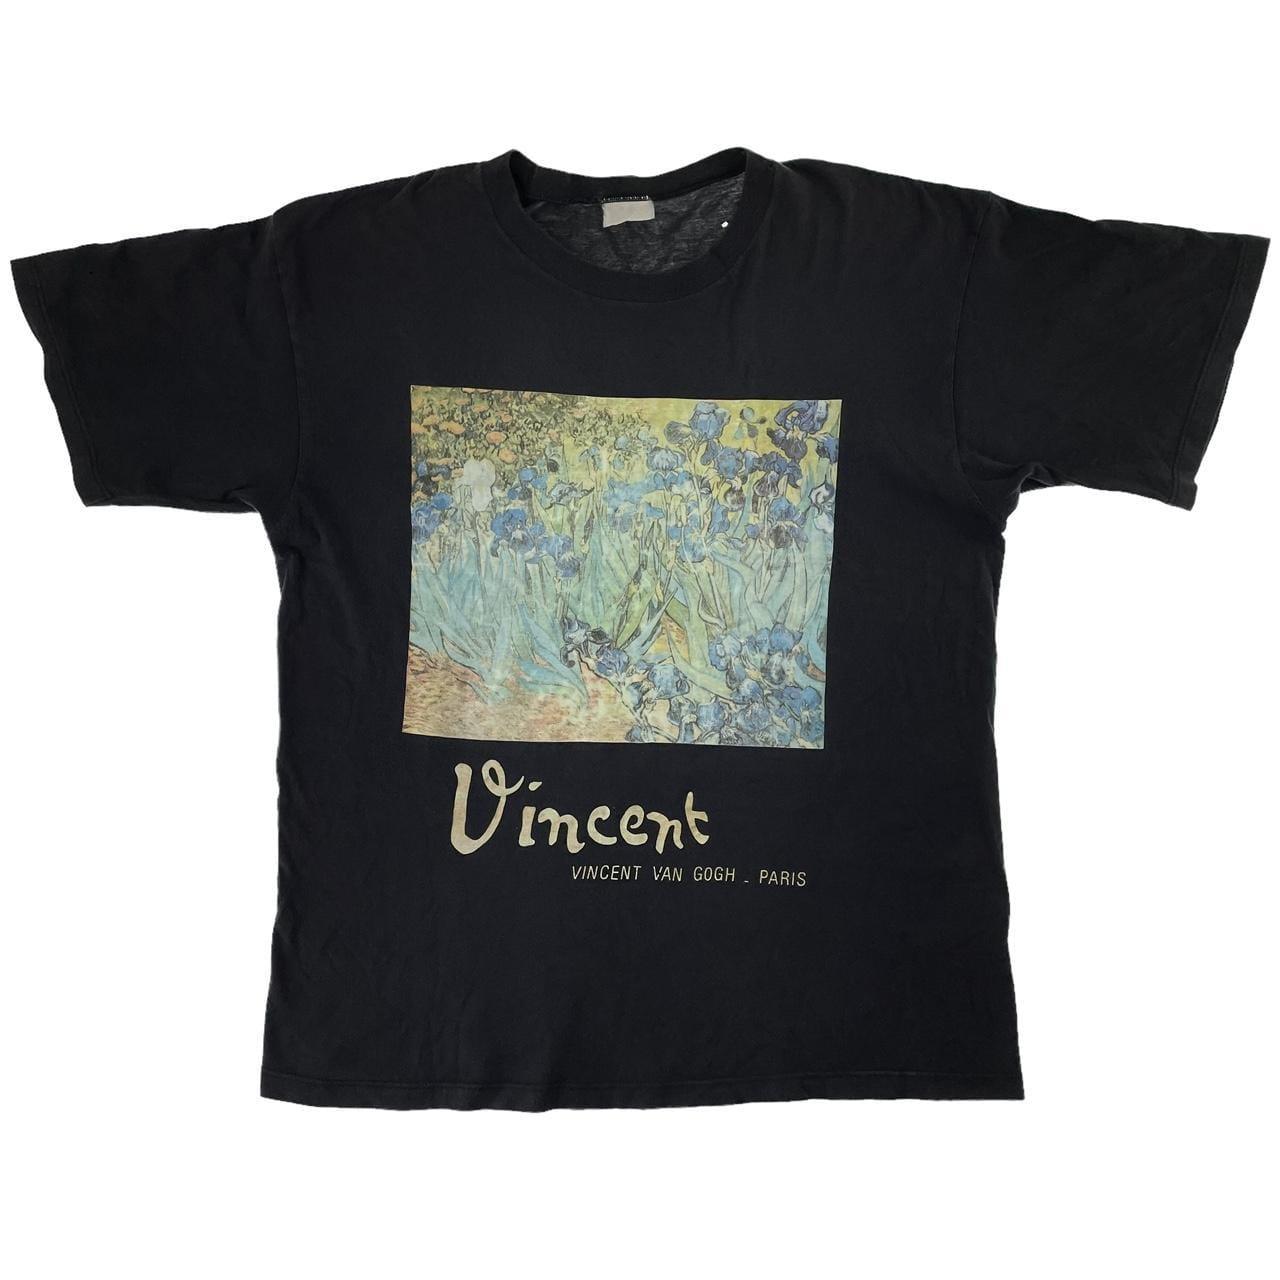 Vintage Van Gogh irises art t shirt size M - Known Source